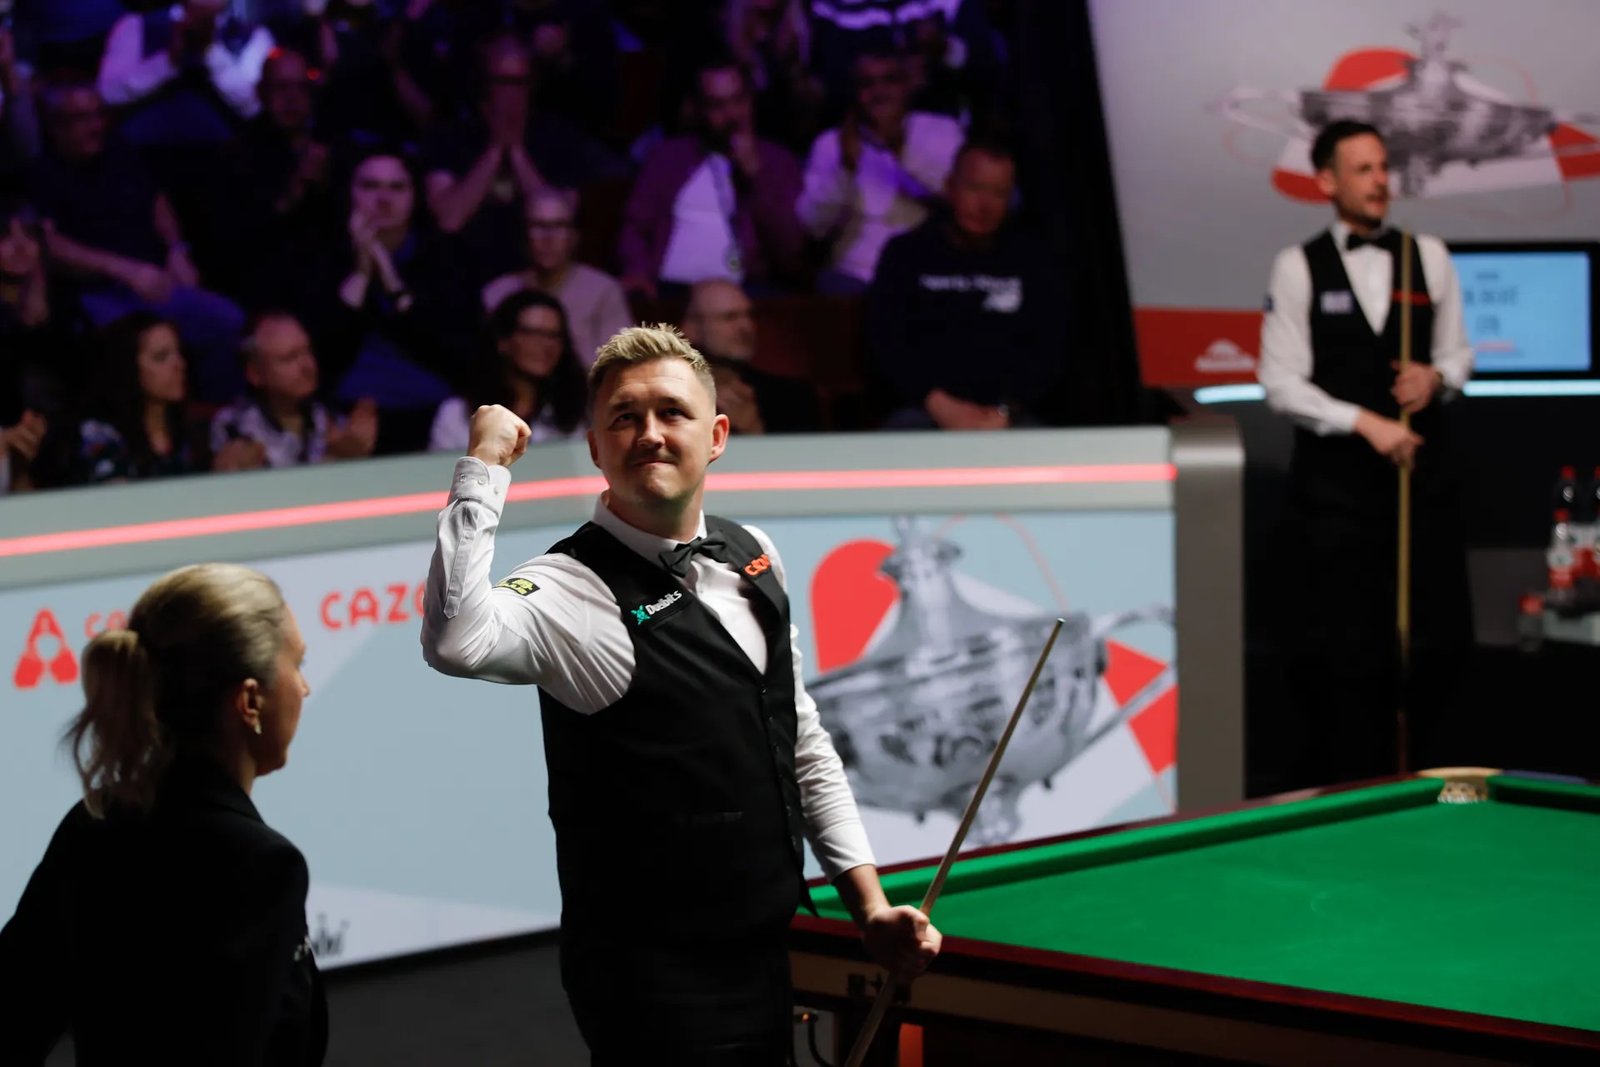 Kyren Wilson Claims Emotional First World Snooker Title in Sheffield Thriller